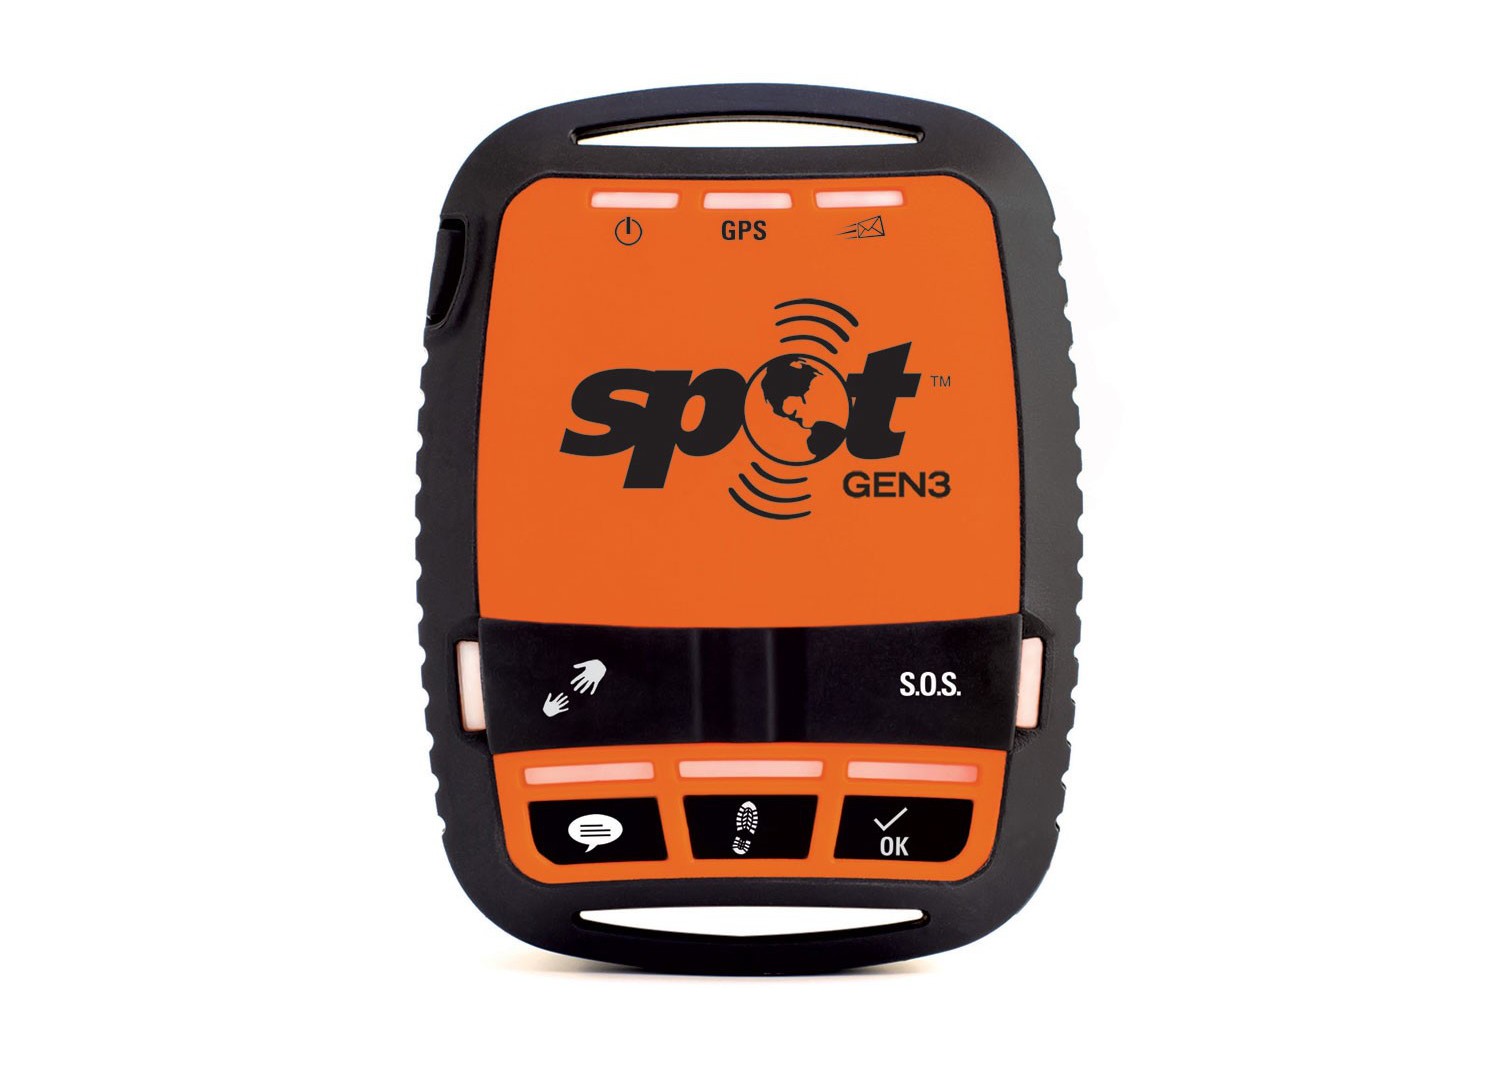 Spot Gen-3, localizador satelital